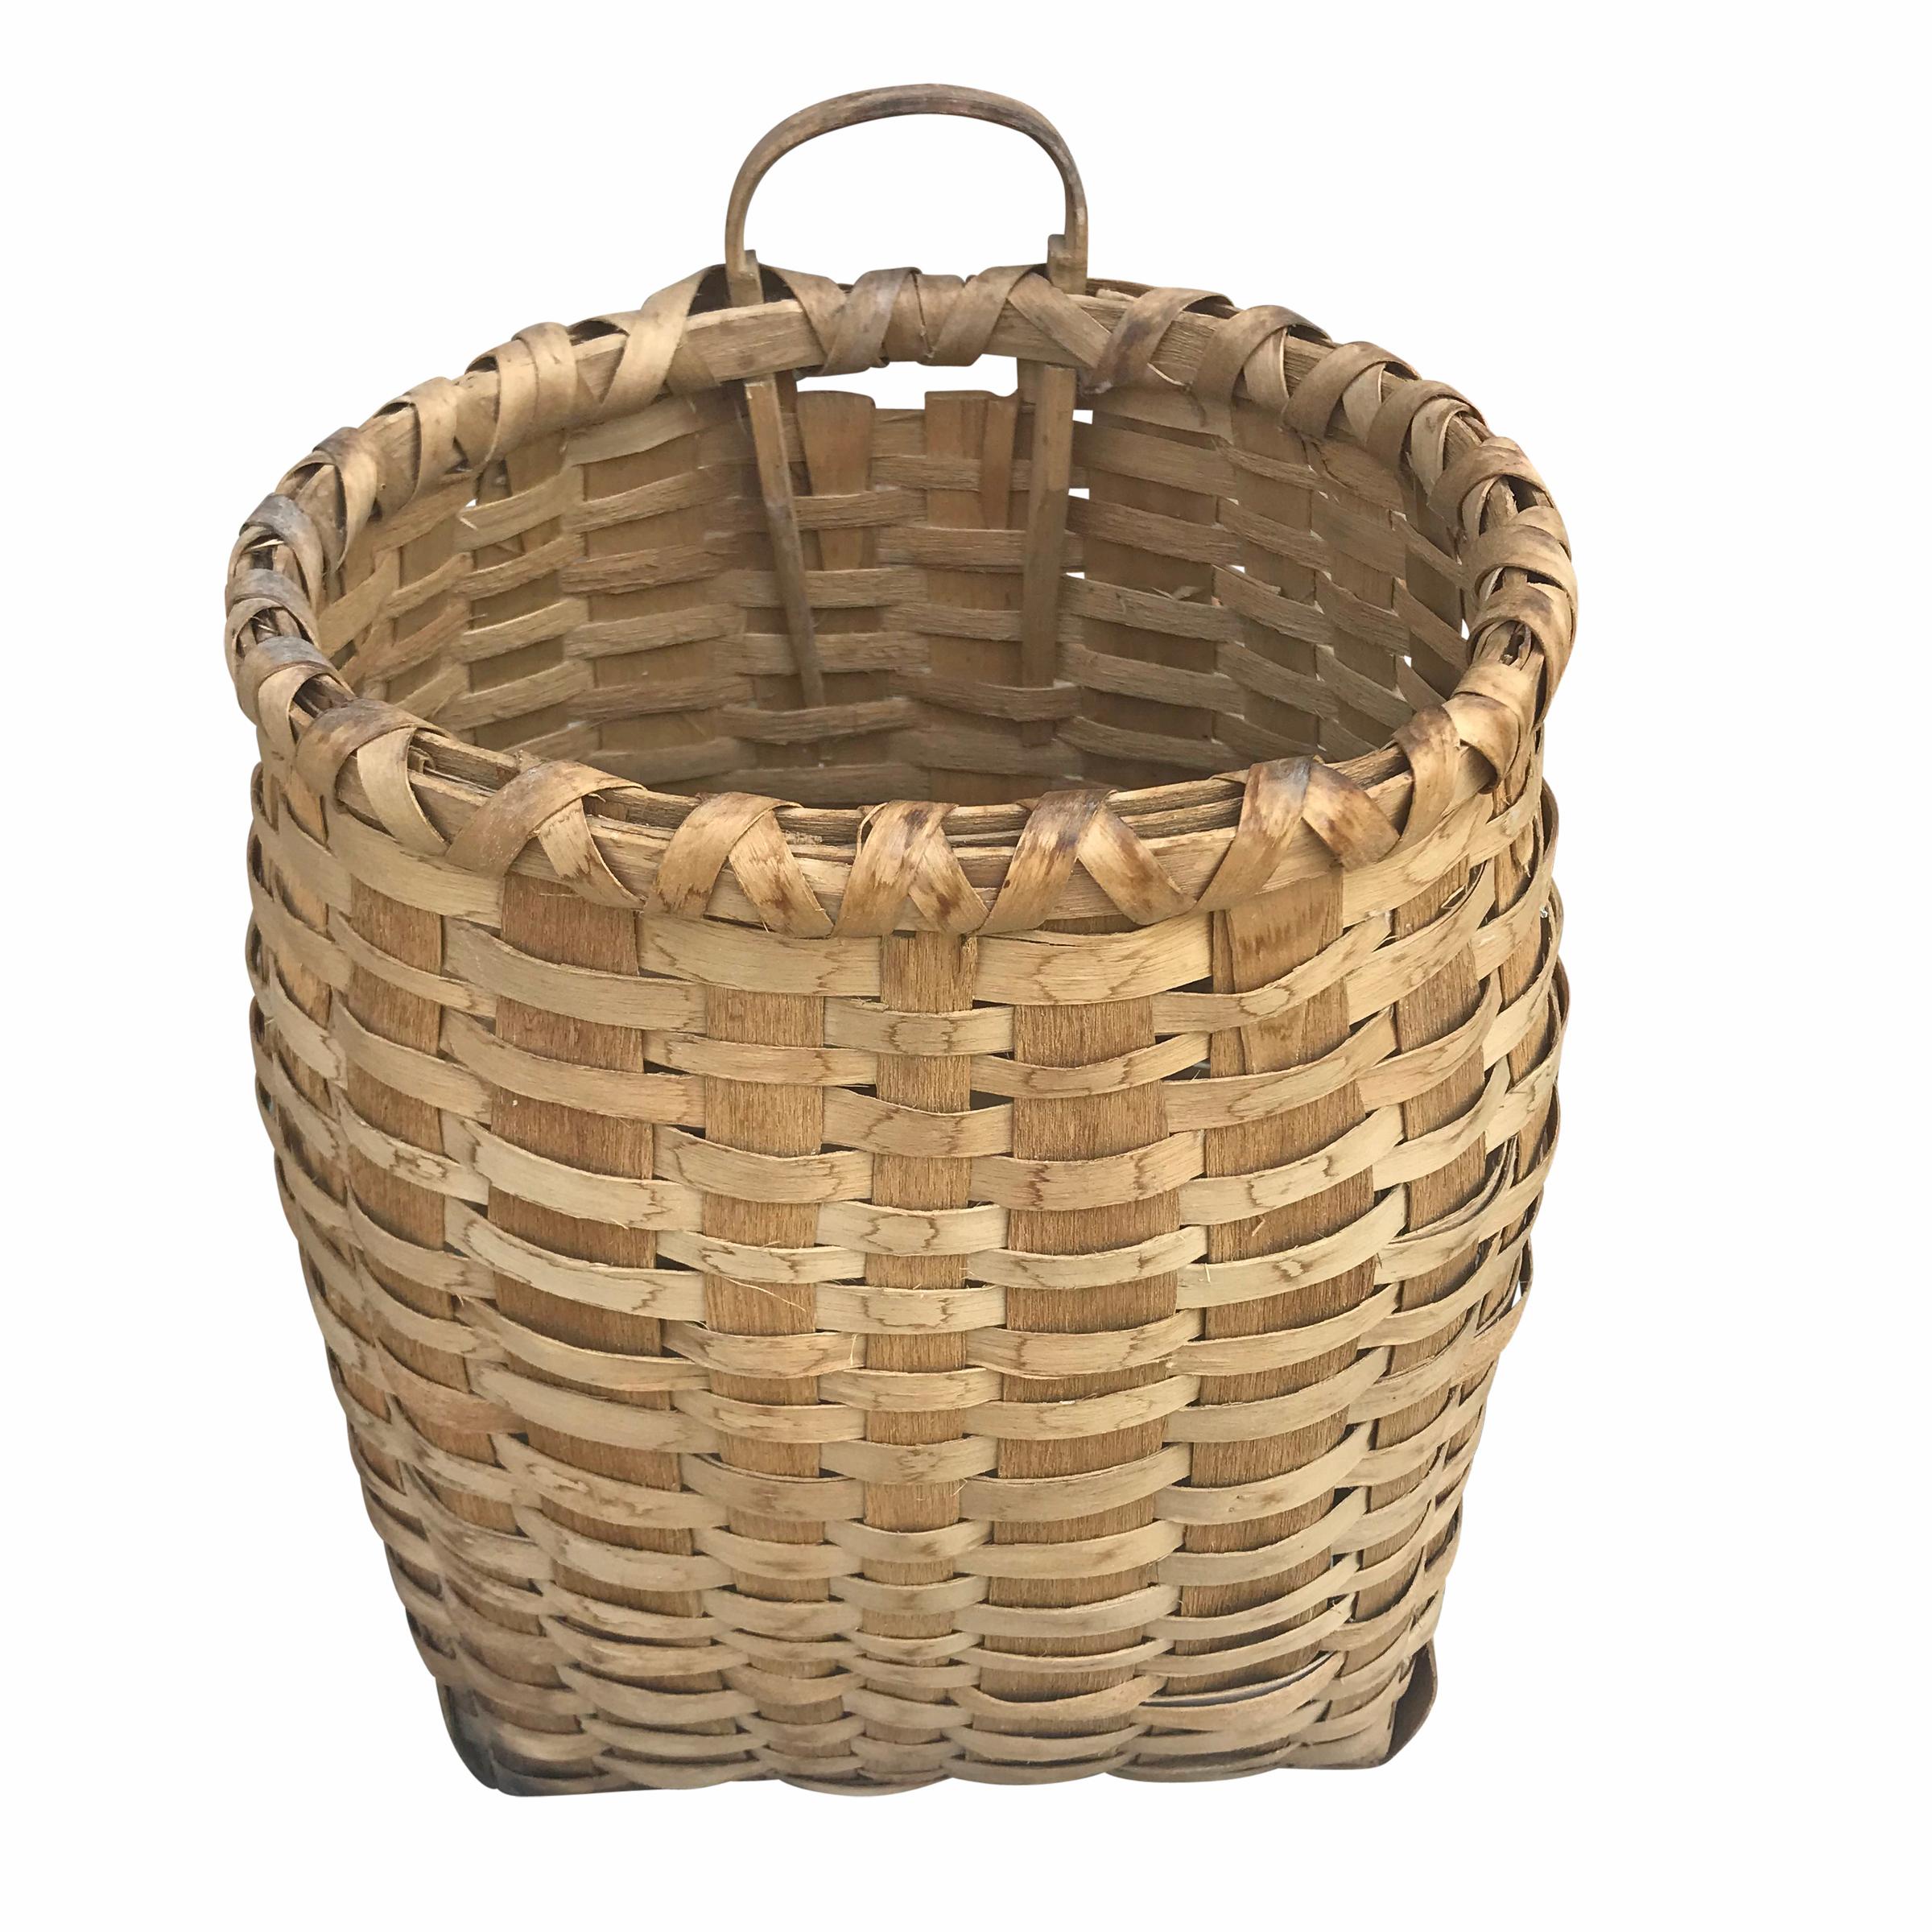 Hand-Woven Early 20th Century Ash Splint Basket